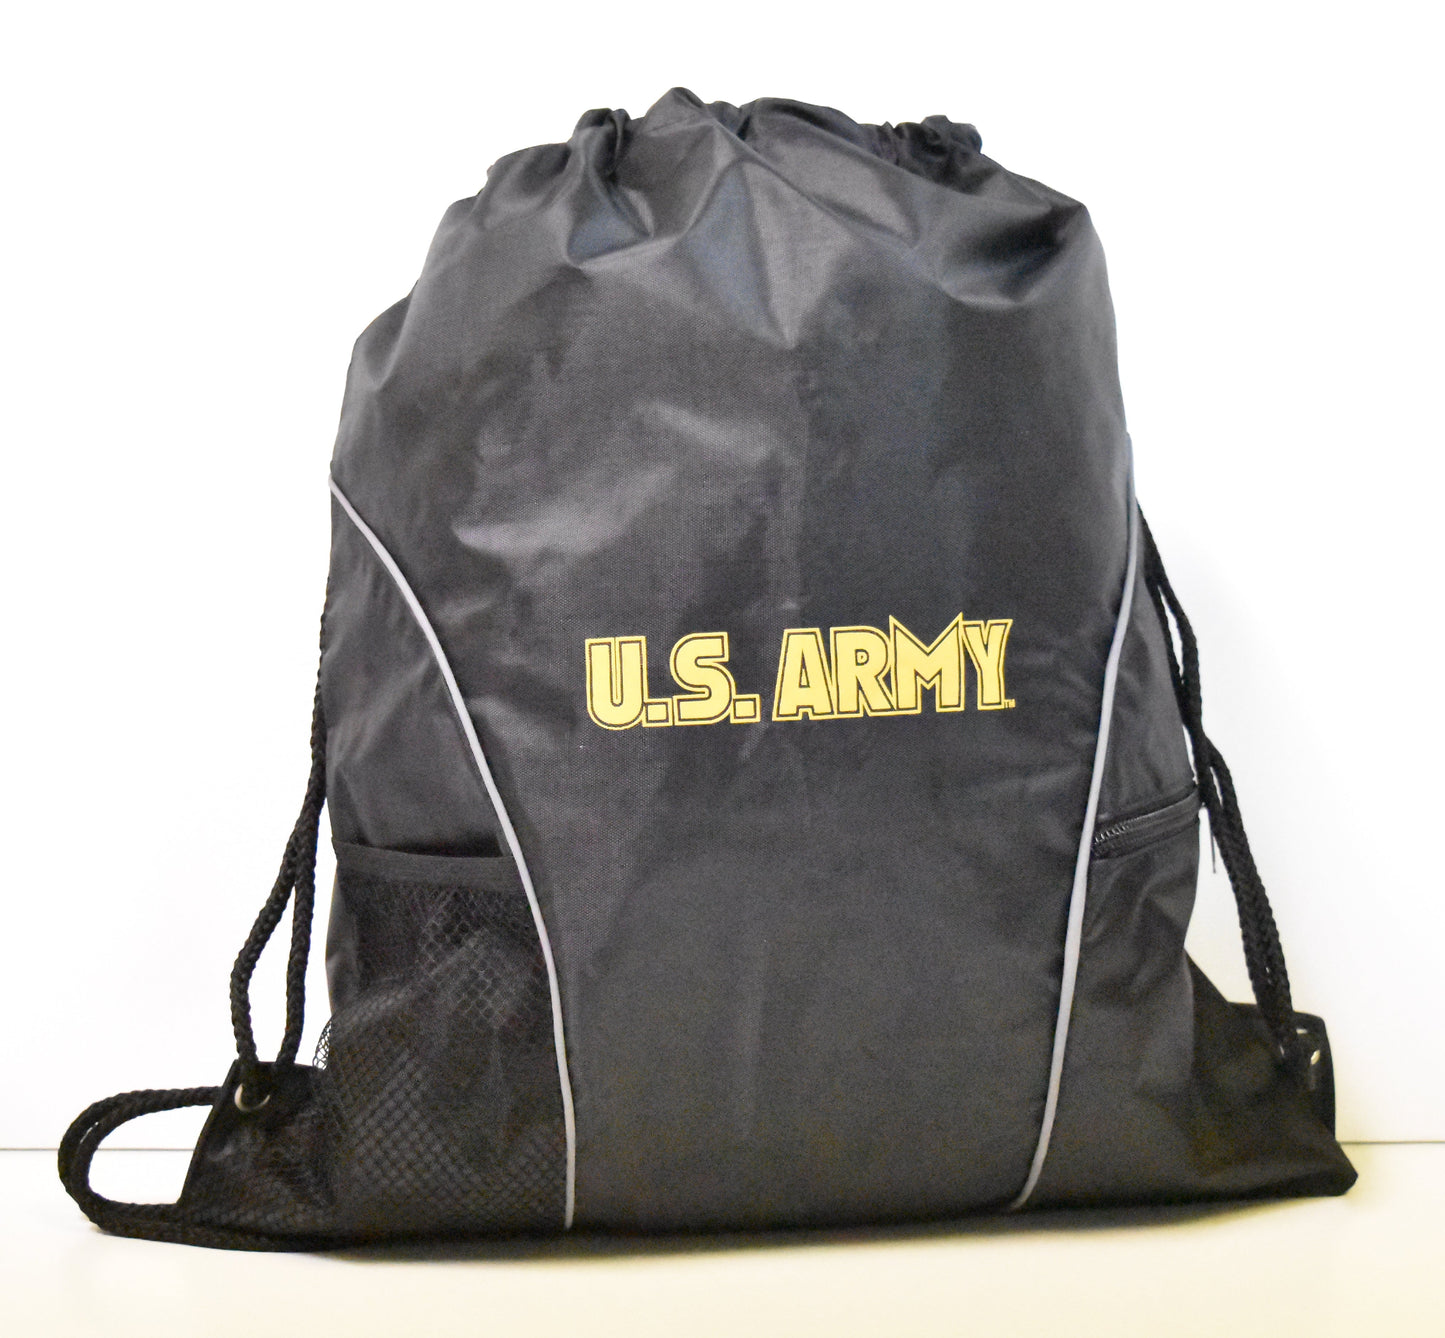 Cinch Pack U.S. Army Black with Drawstring